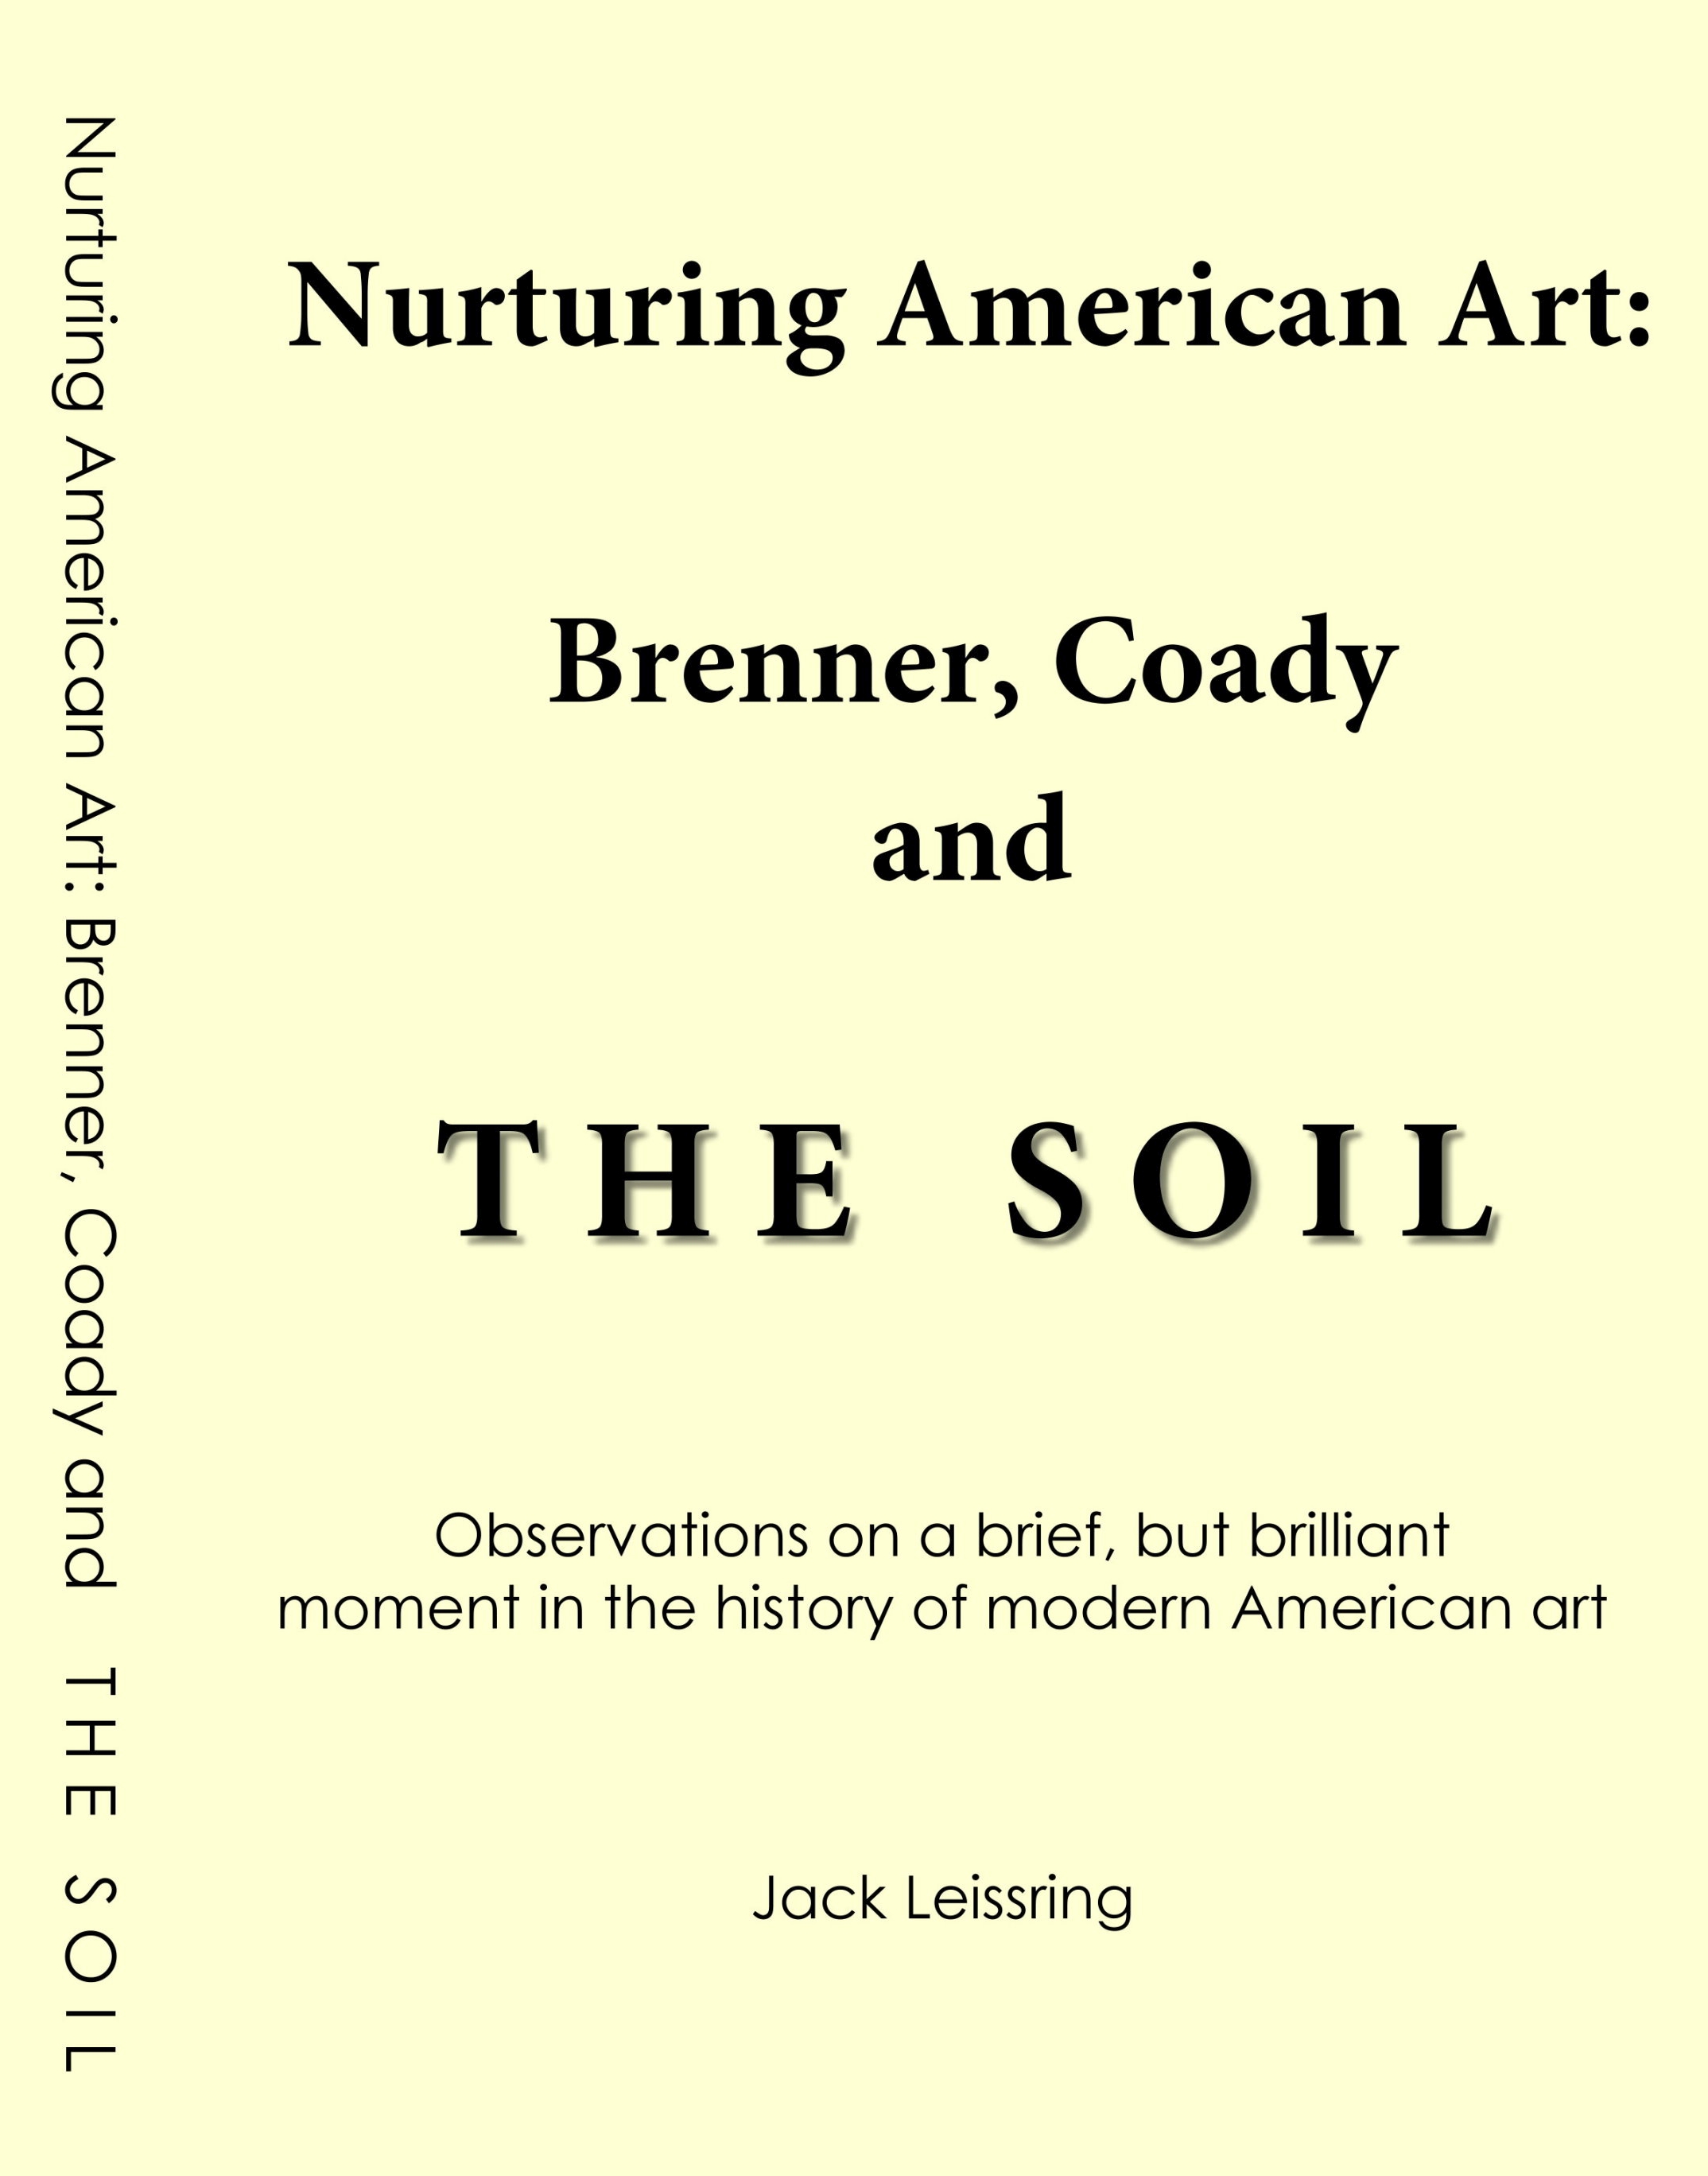 nurturing american art-cover